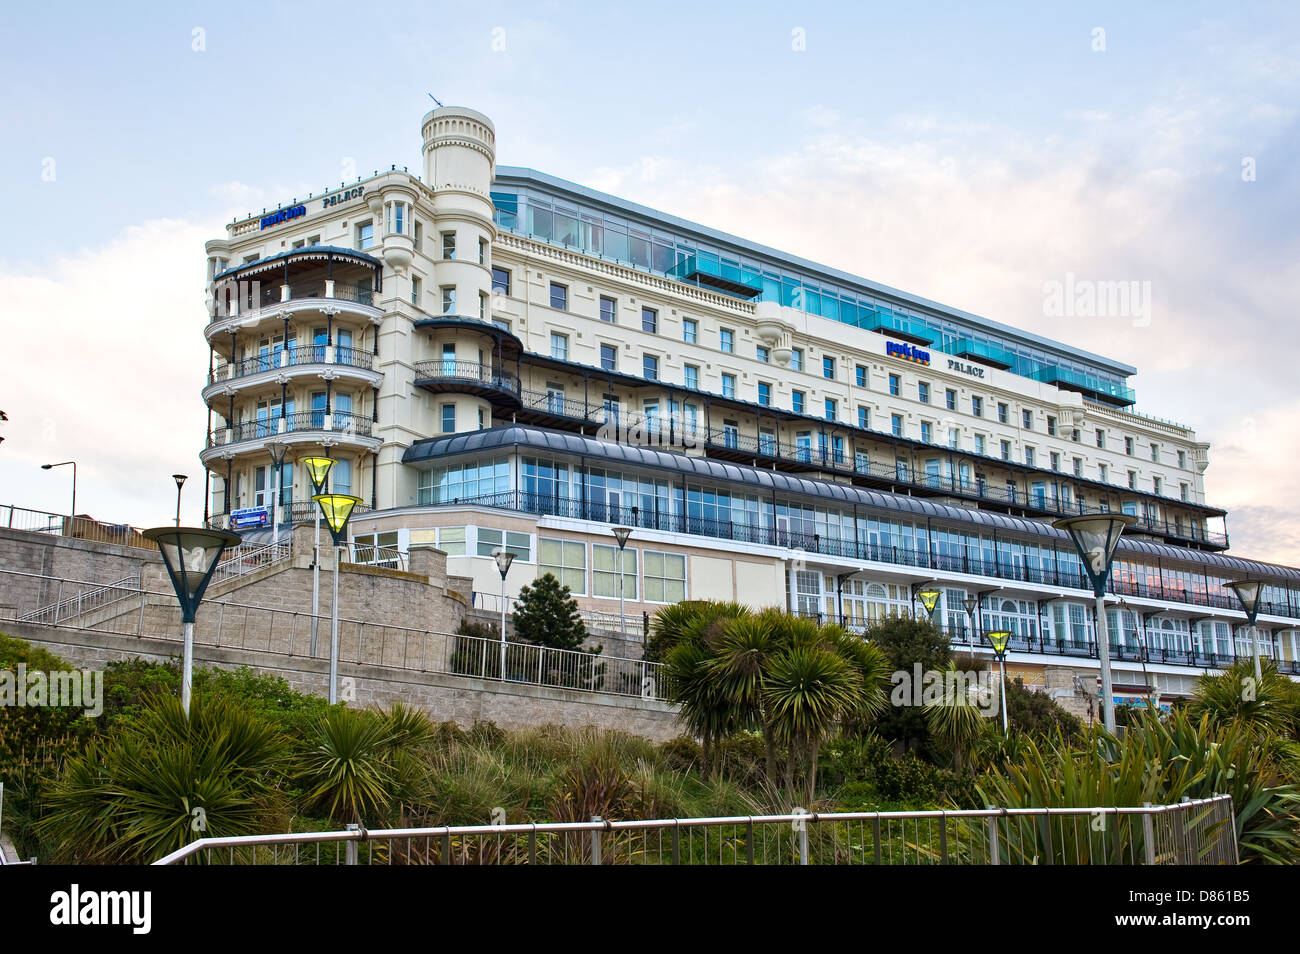 Il Radisson Palace Park Inn Hotel, Southend on Sea. Foto Stock